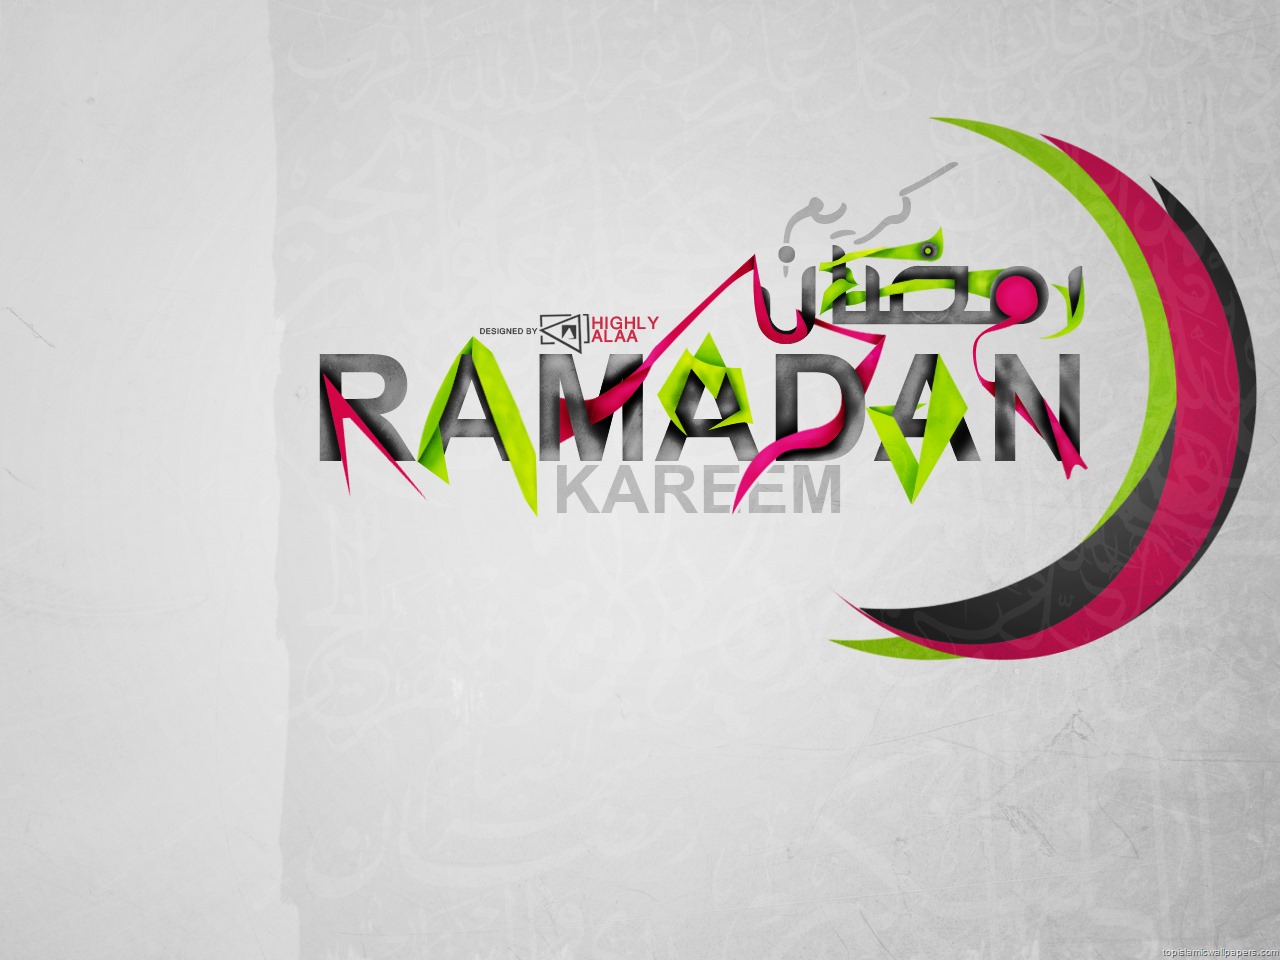 Ramadan kareem hd background wallpaper 2014